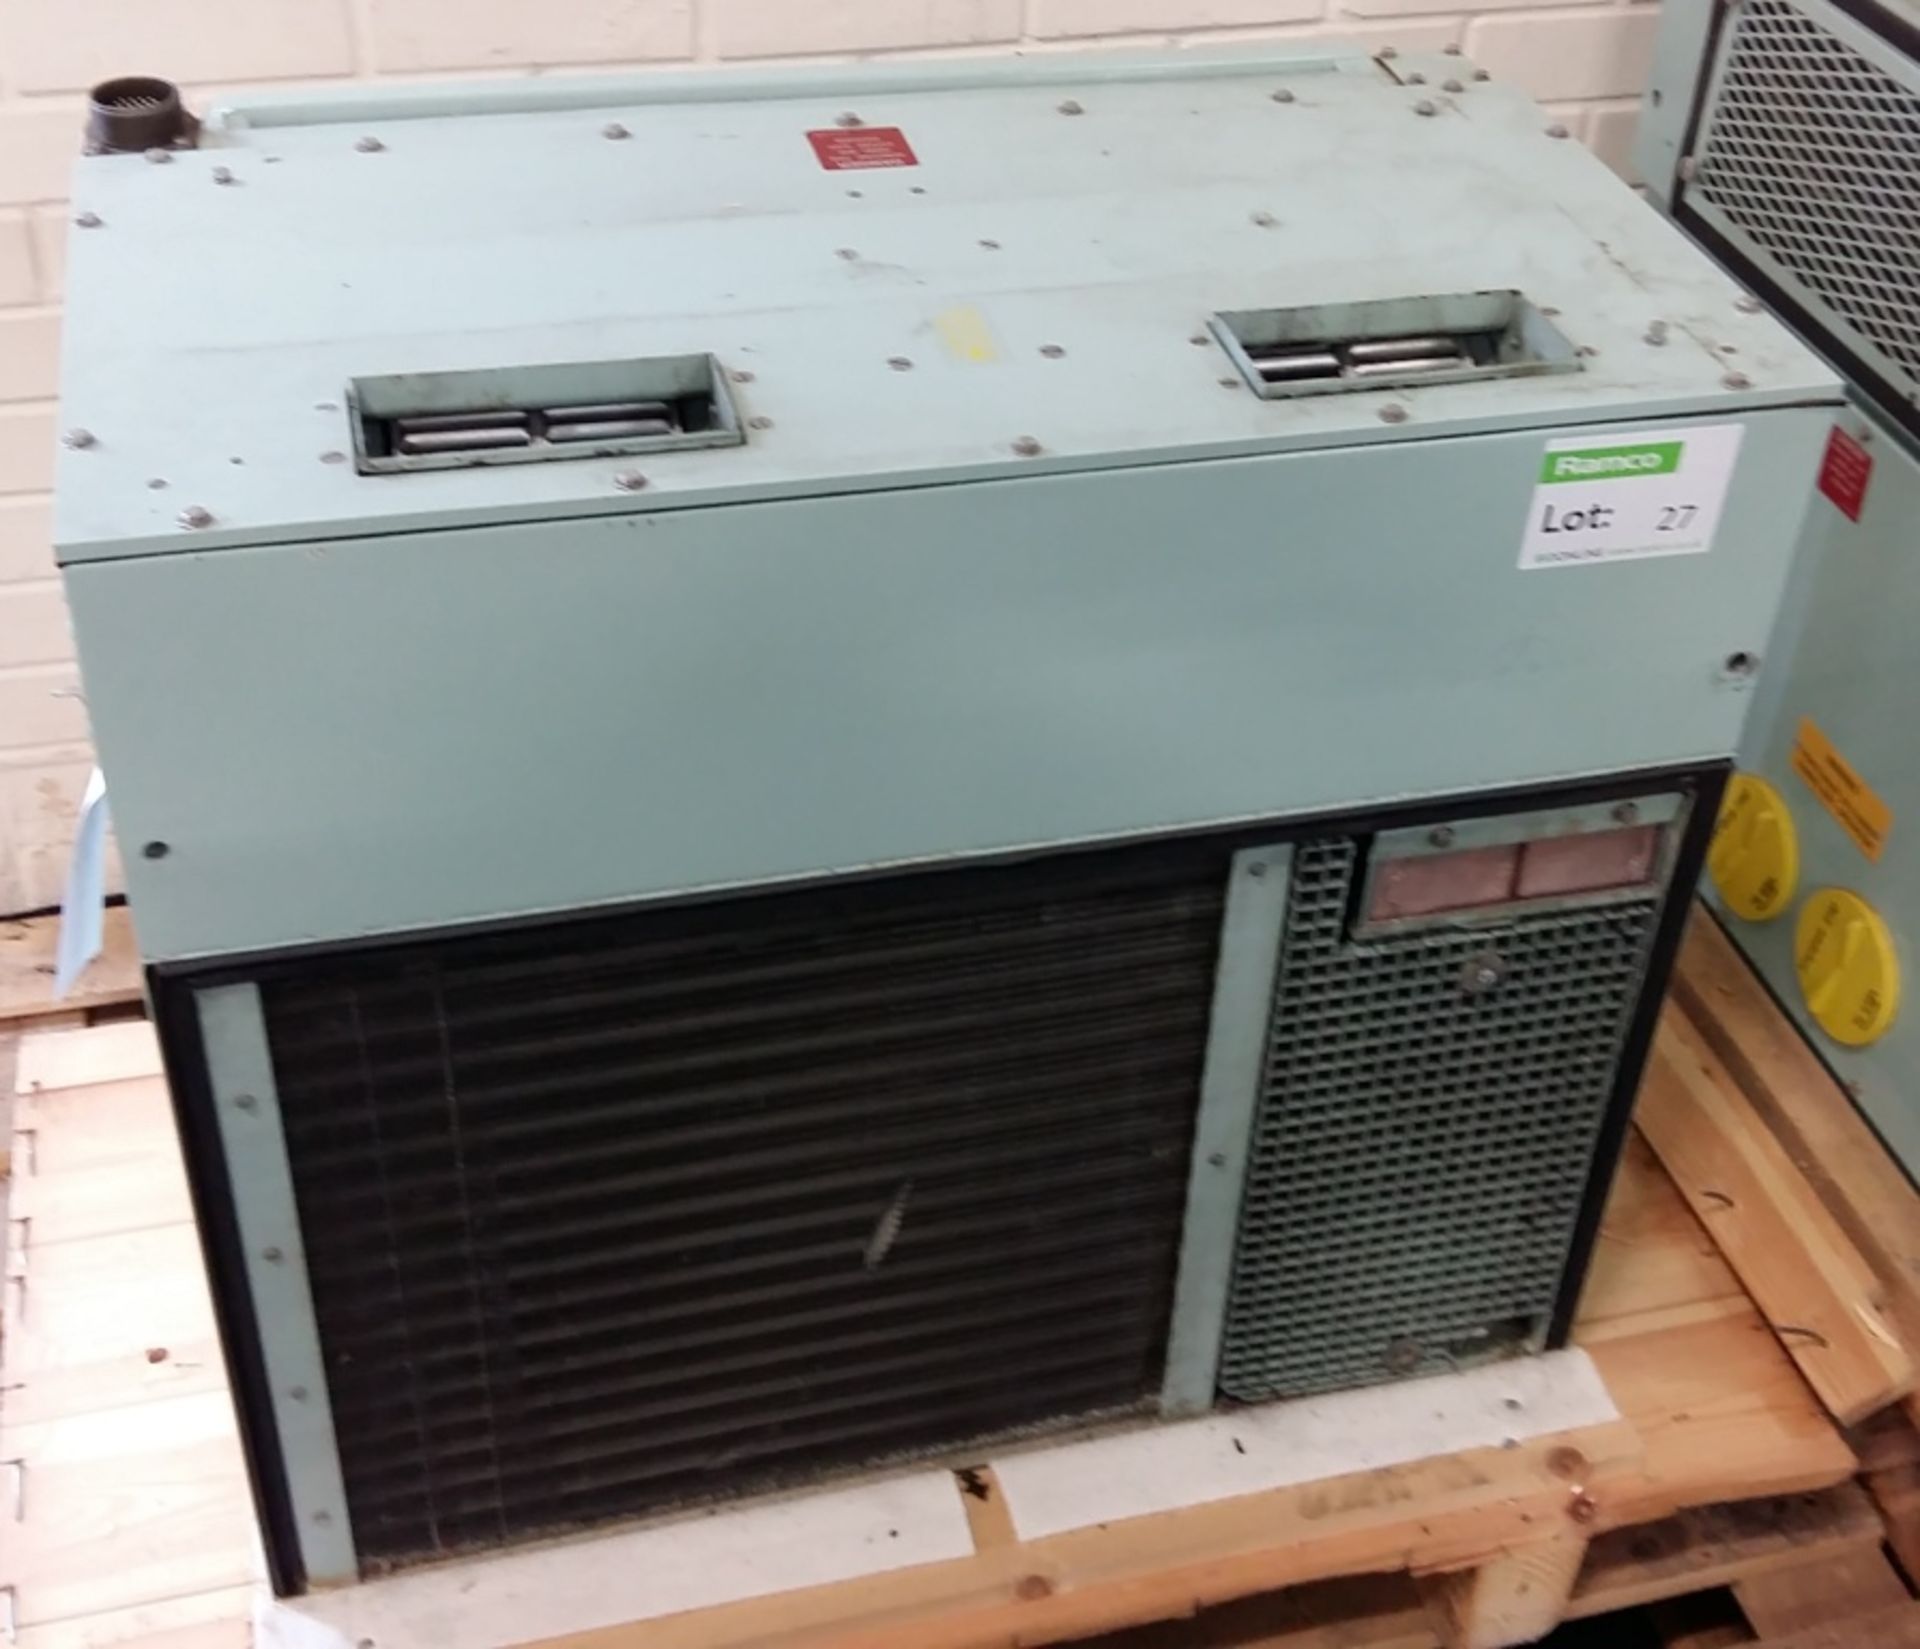 Air conditioning unit - AC No. 57/203 - NSN 4120-99-208-3288 - FV 783836/2